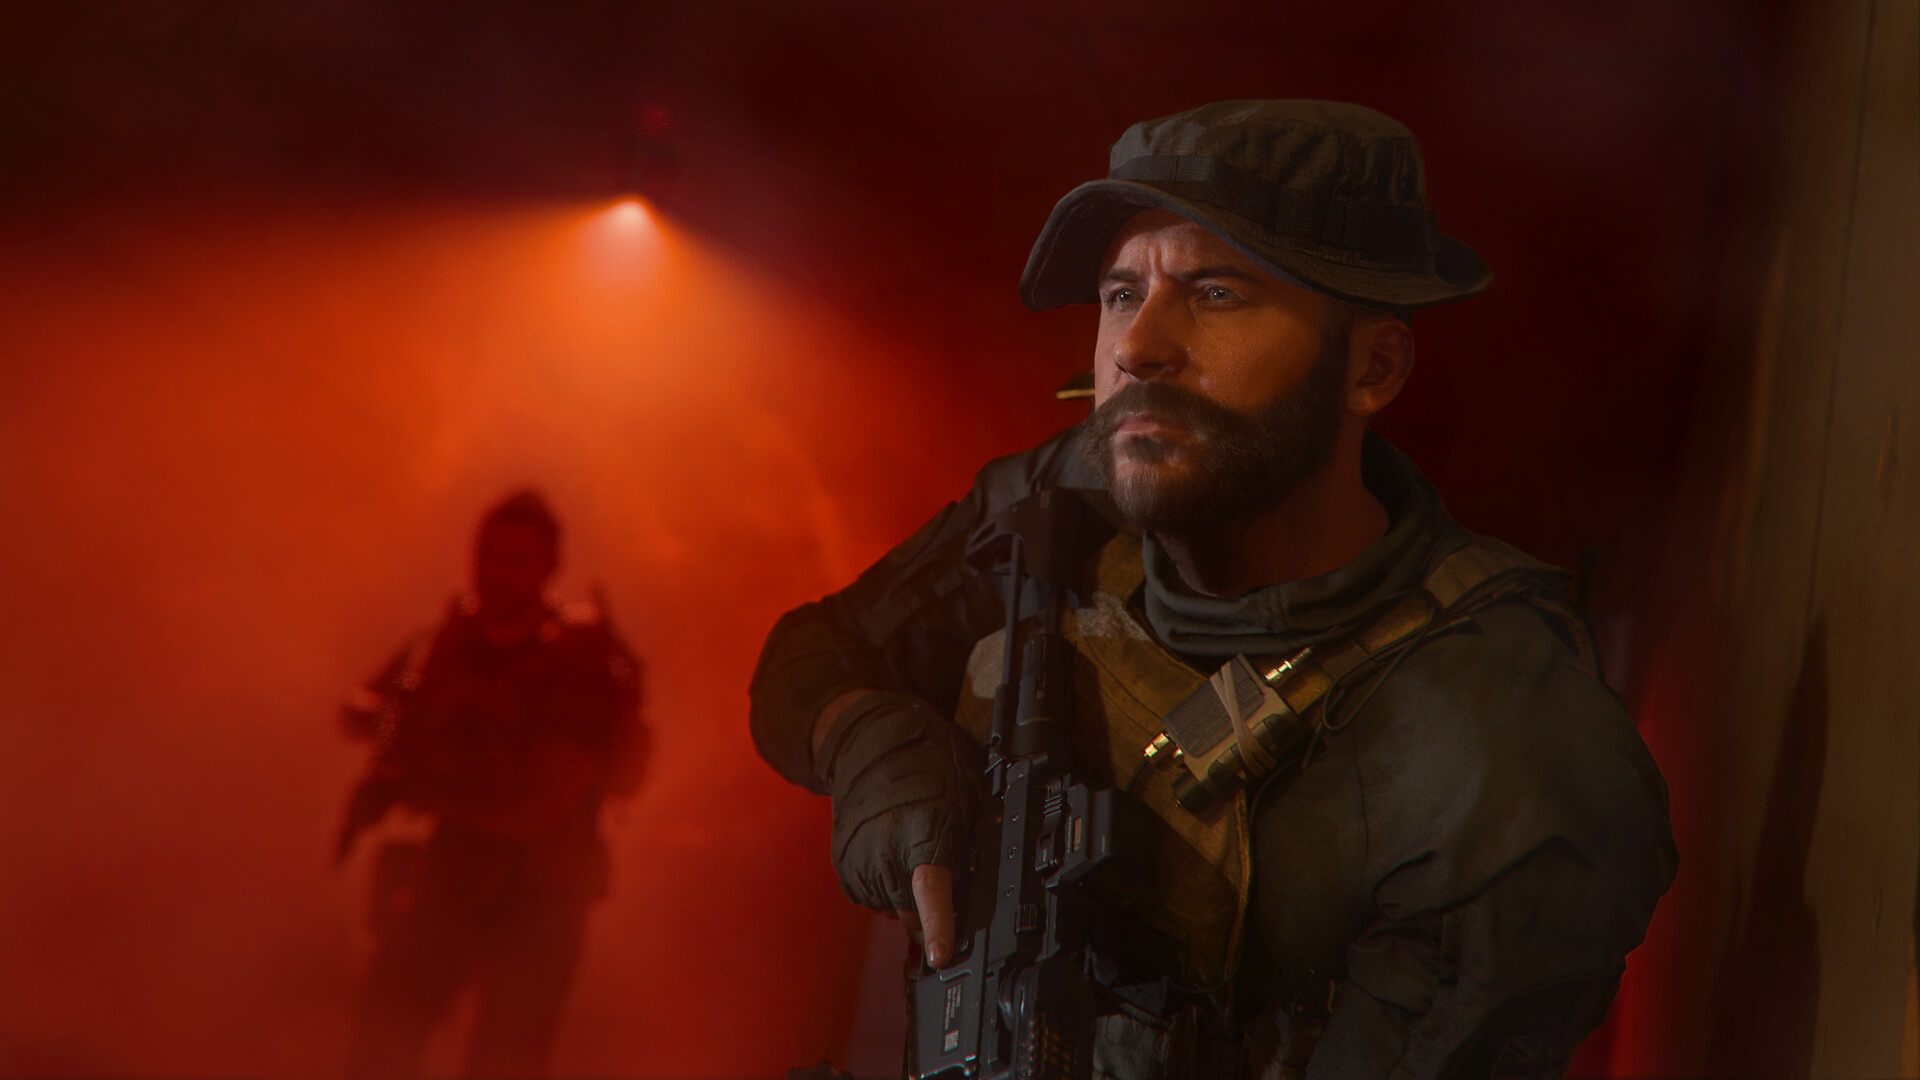 Steam Workshop::Call of Duty Modern Warfare 2 Music